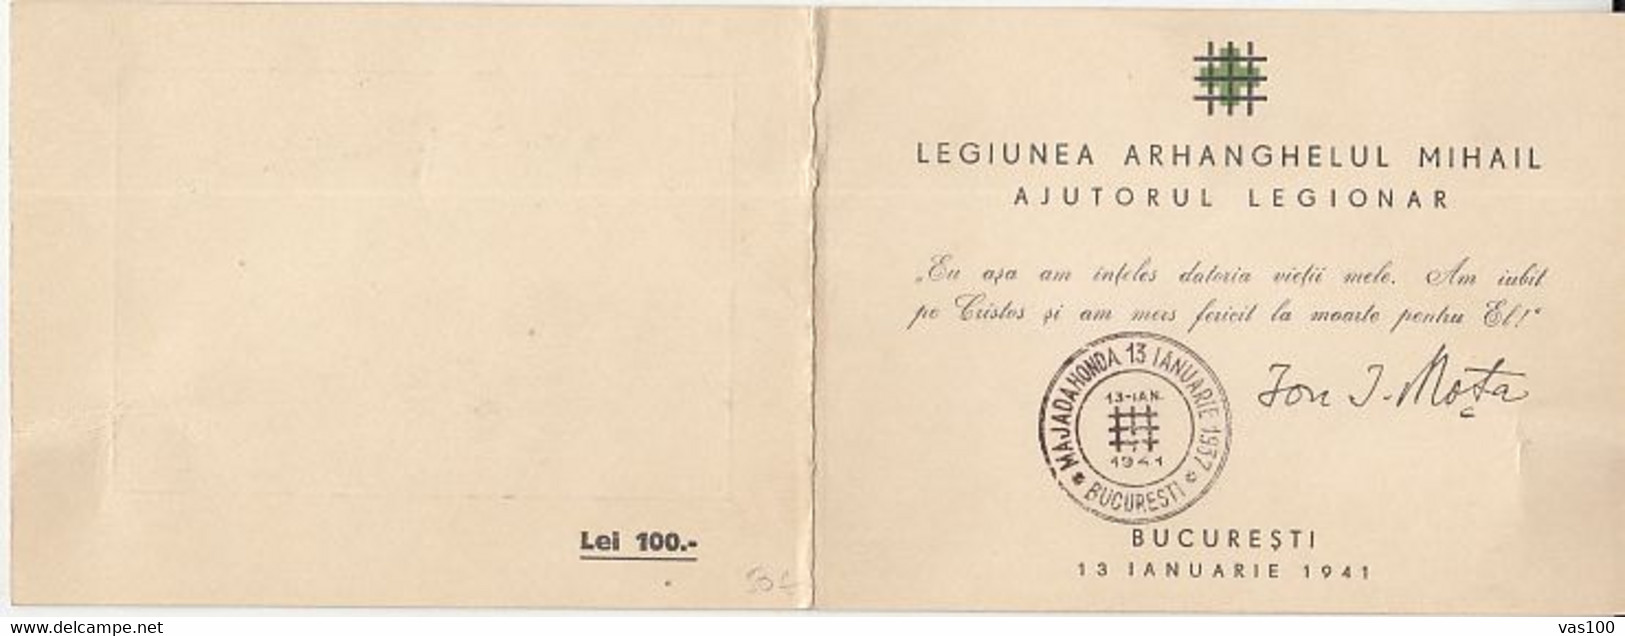 ION MOTA, VASILE MARIN, IRON GUARD, ARCHANGEL MICHAEL LEGION, BOOKLET, 1941, ROMANIA - Carnets